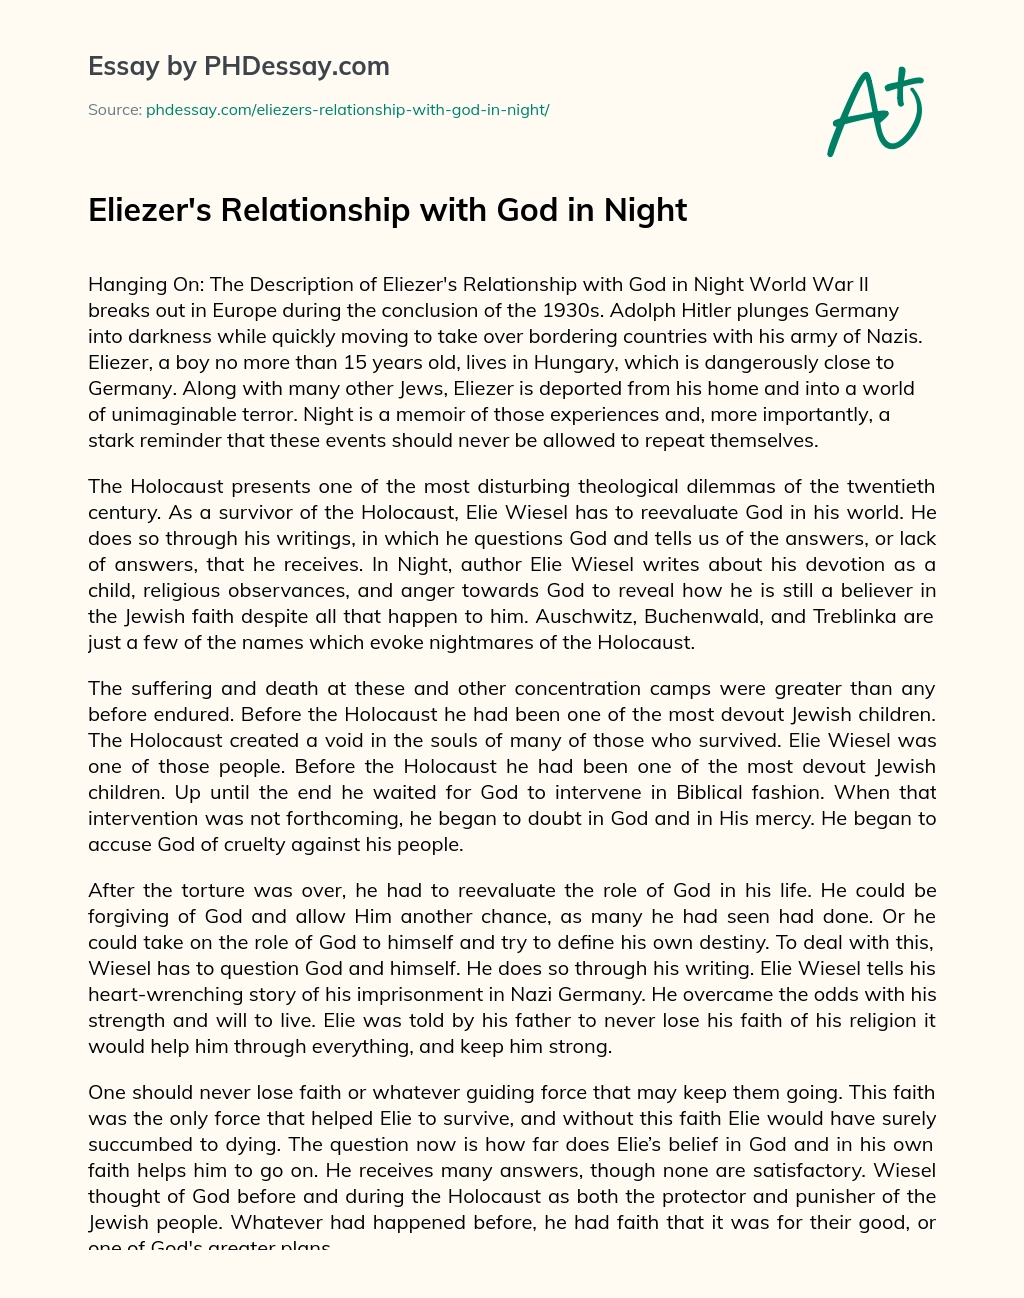 Eliezer’s Relationship with God in Night essay